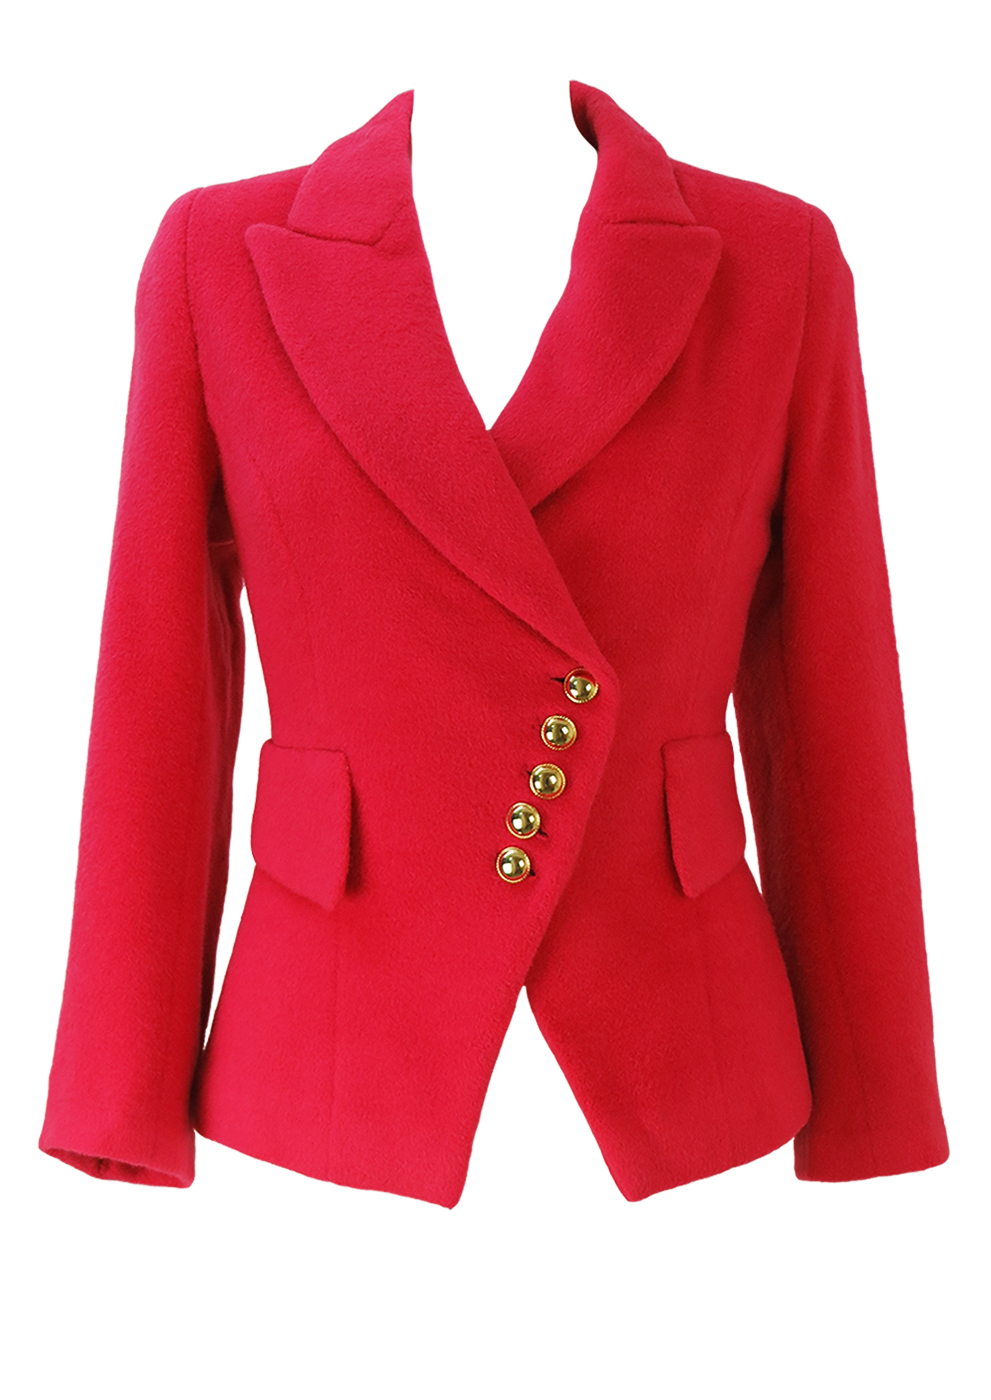 Short Pink Button Coat Pocket Jacket Cardigan Coats and JUL26,Pink,L,United States 